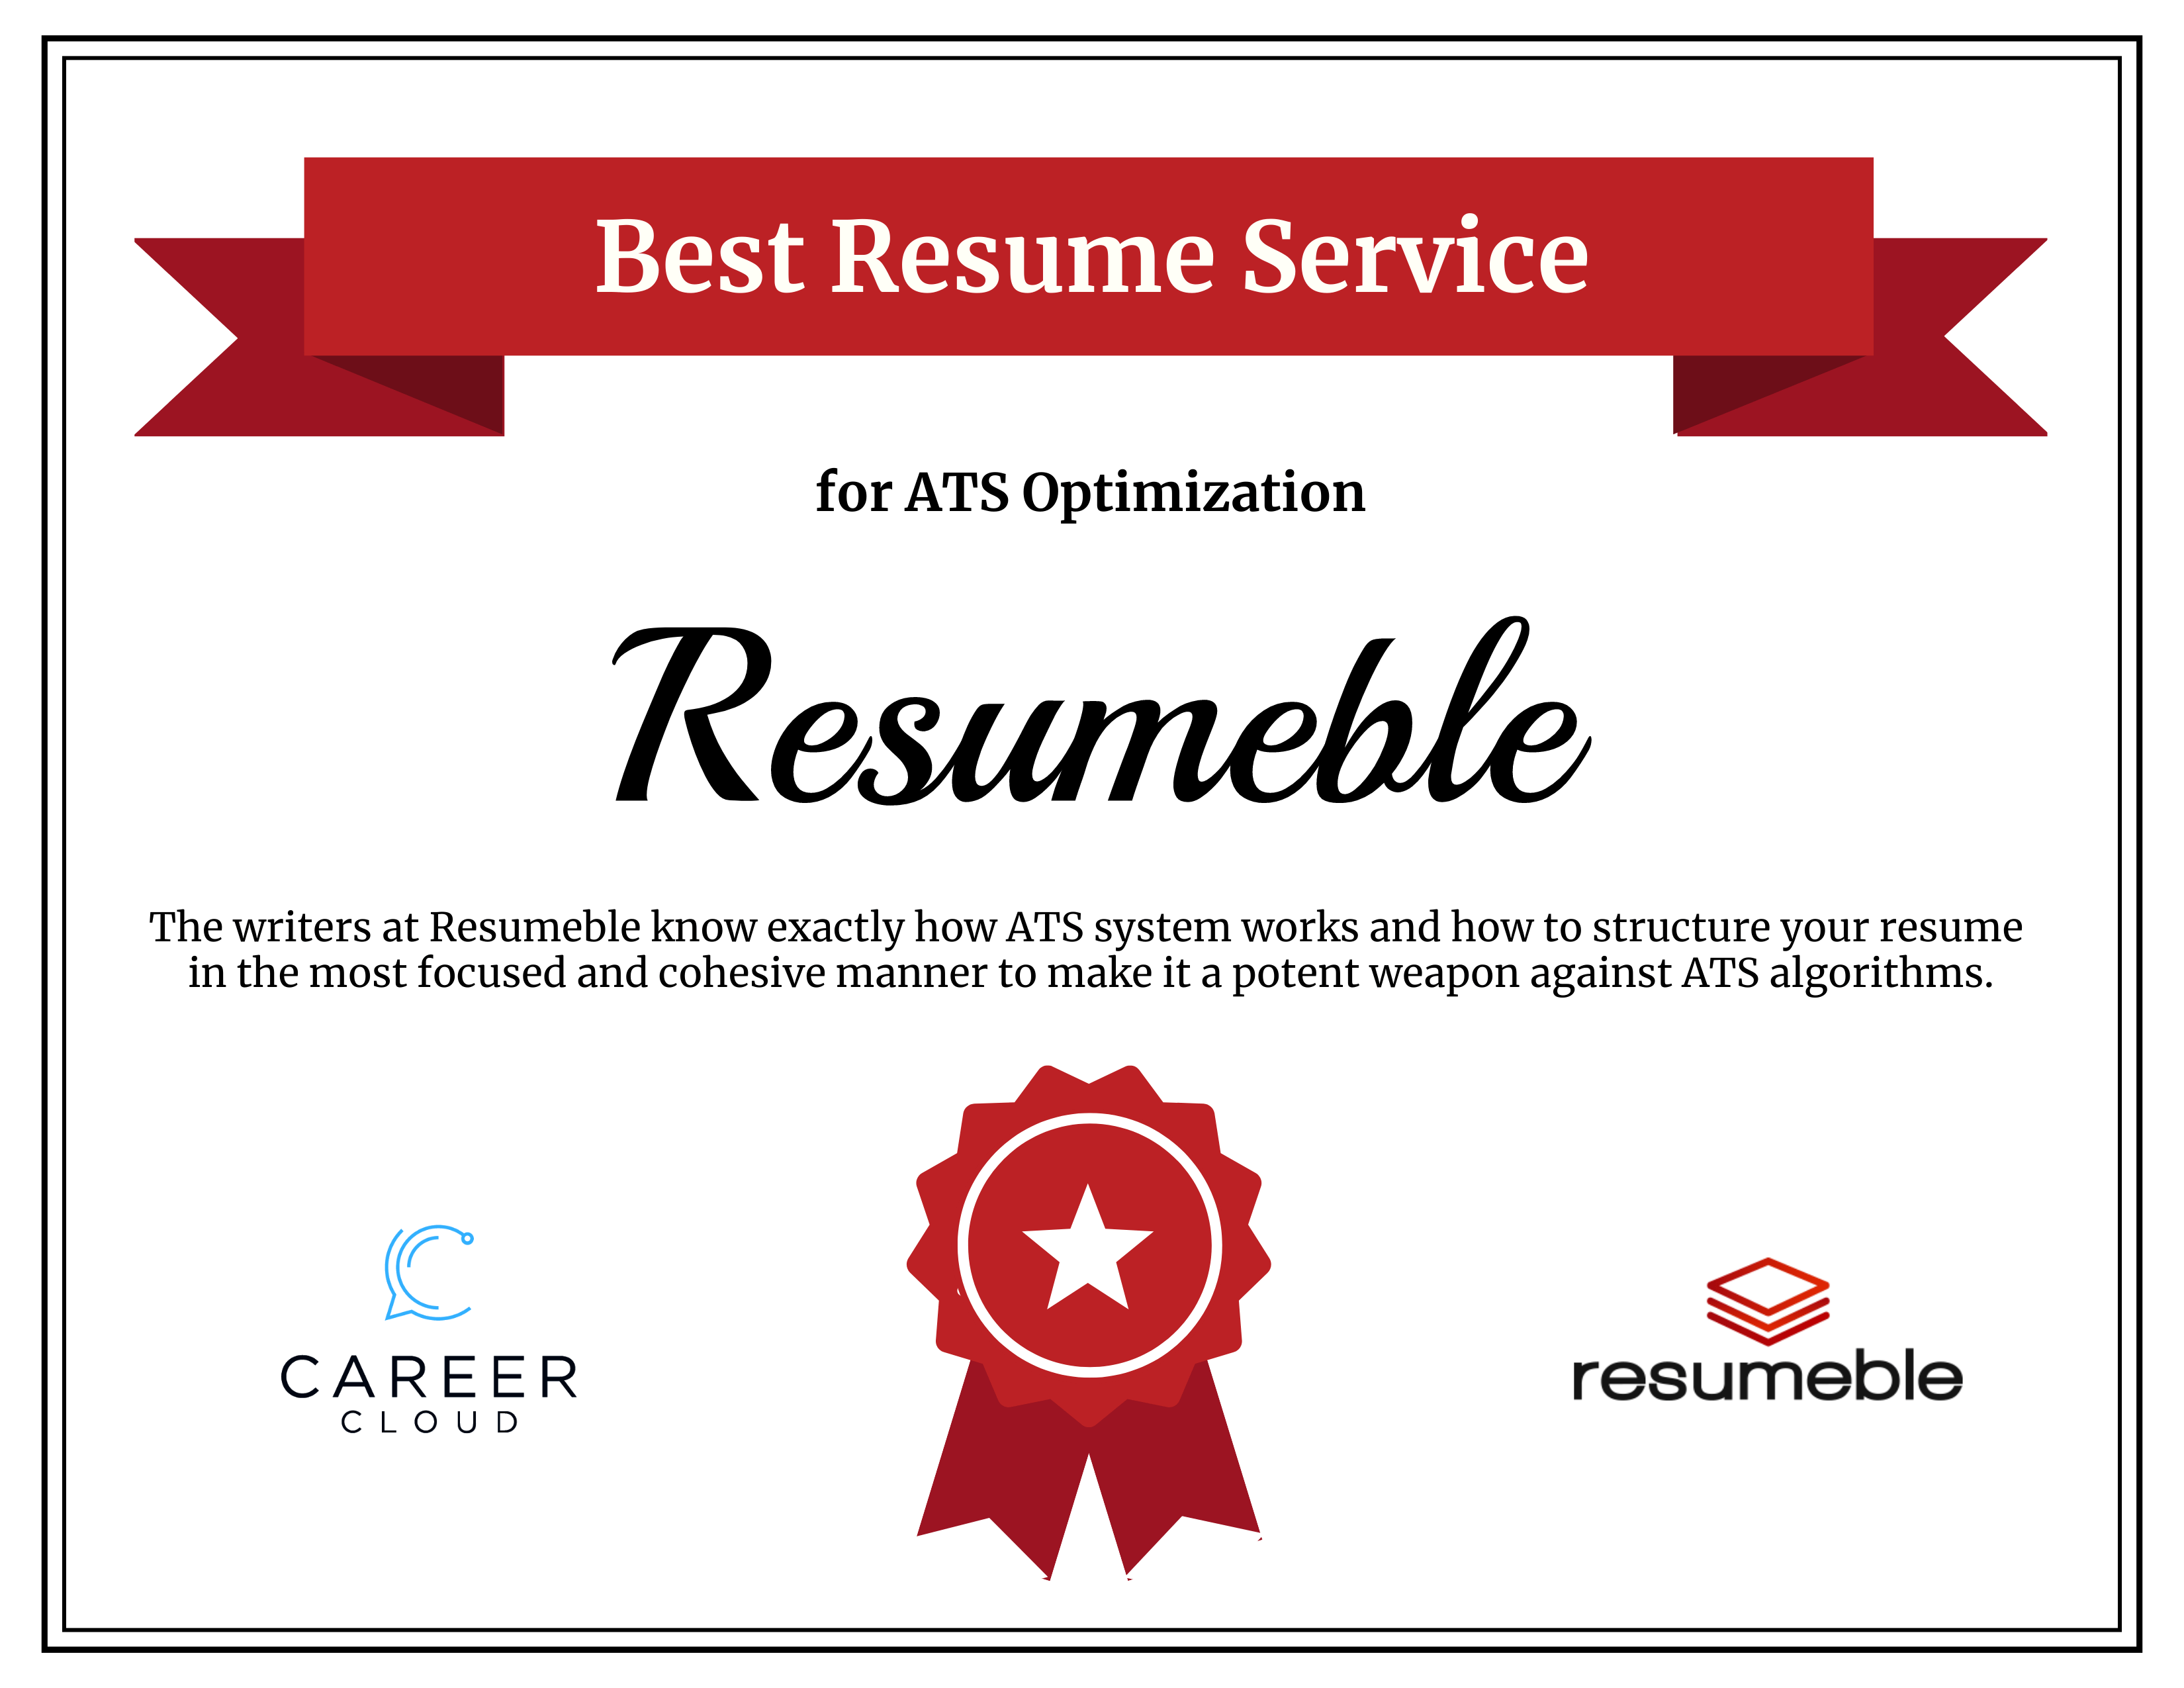 best ATS resume service is Resumeble